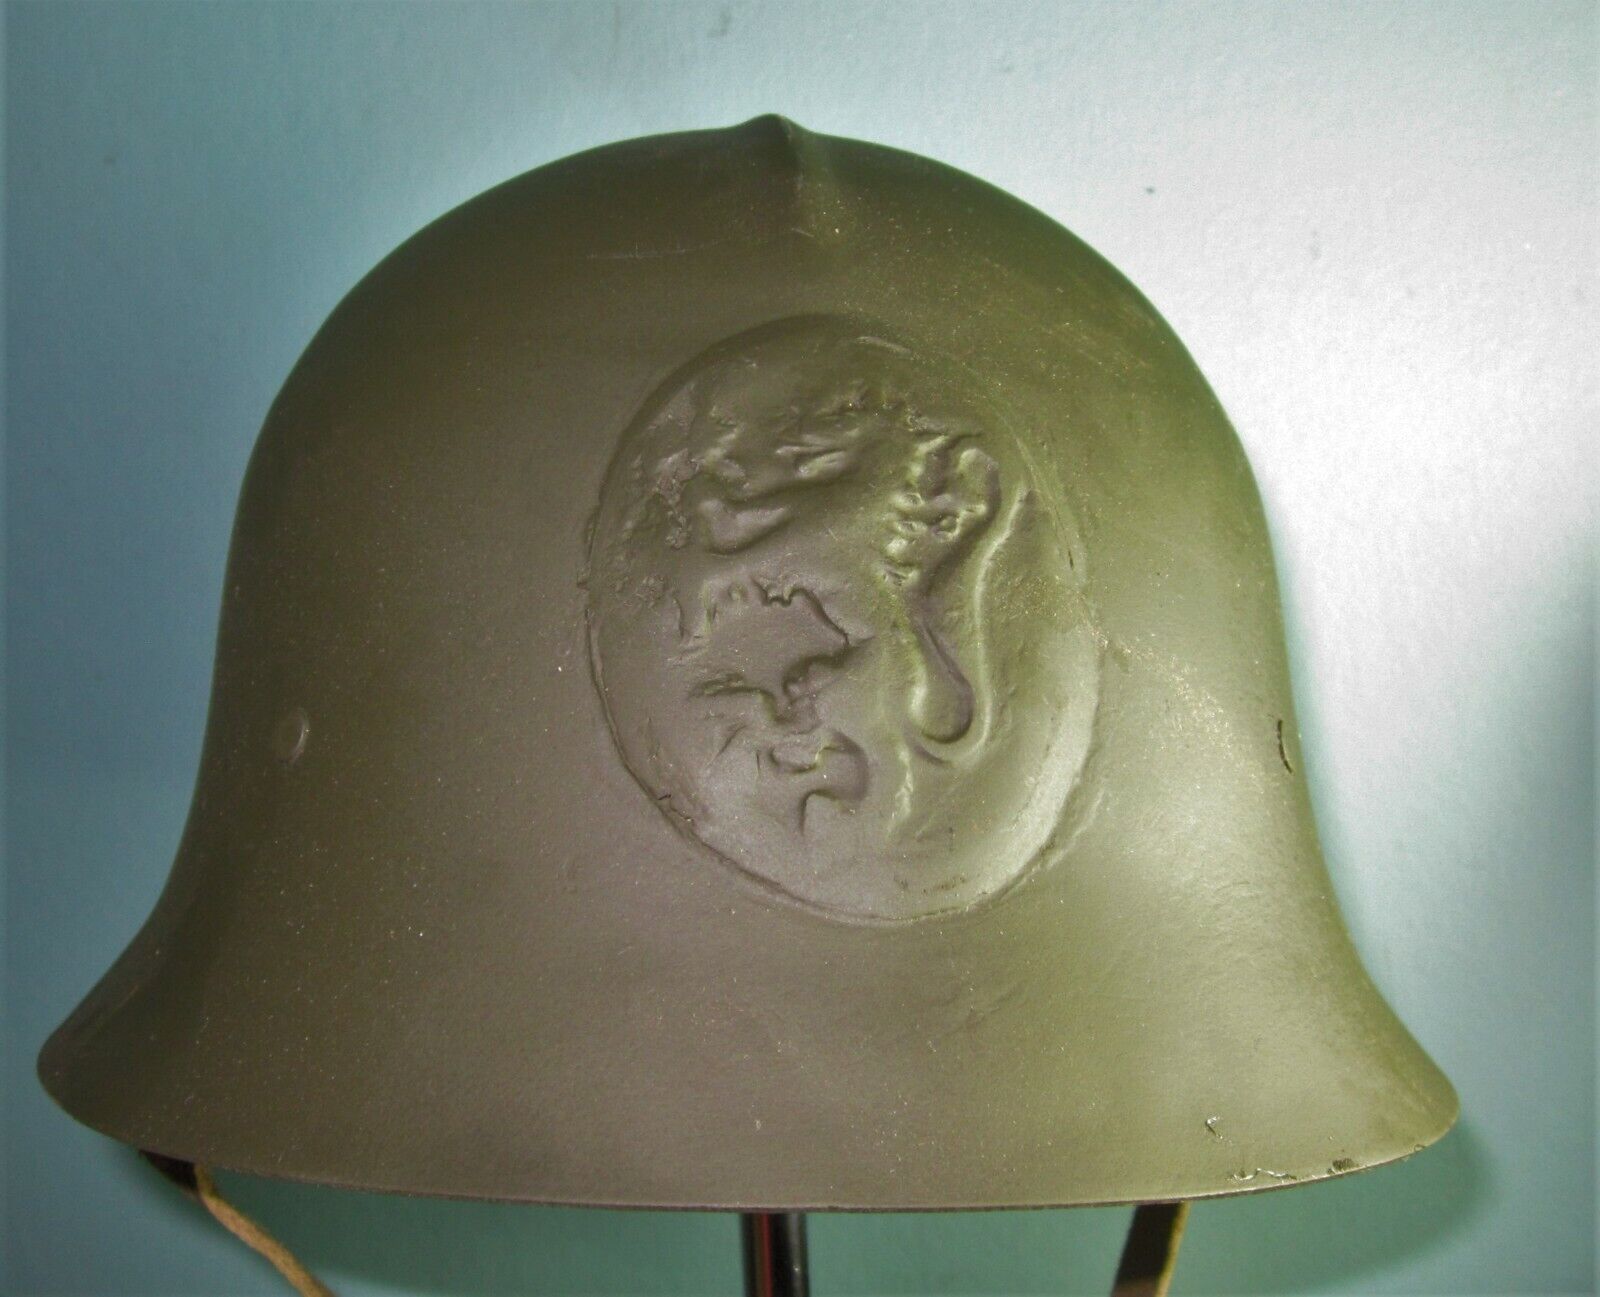 orig Norwegian M31 WW2 Baltic helmet casque casco stahlhelm casco elmo 盔 шлем WK